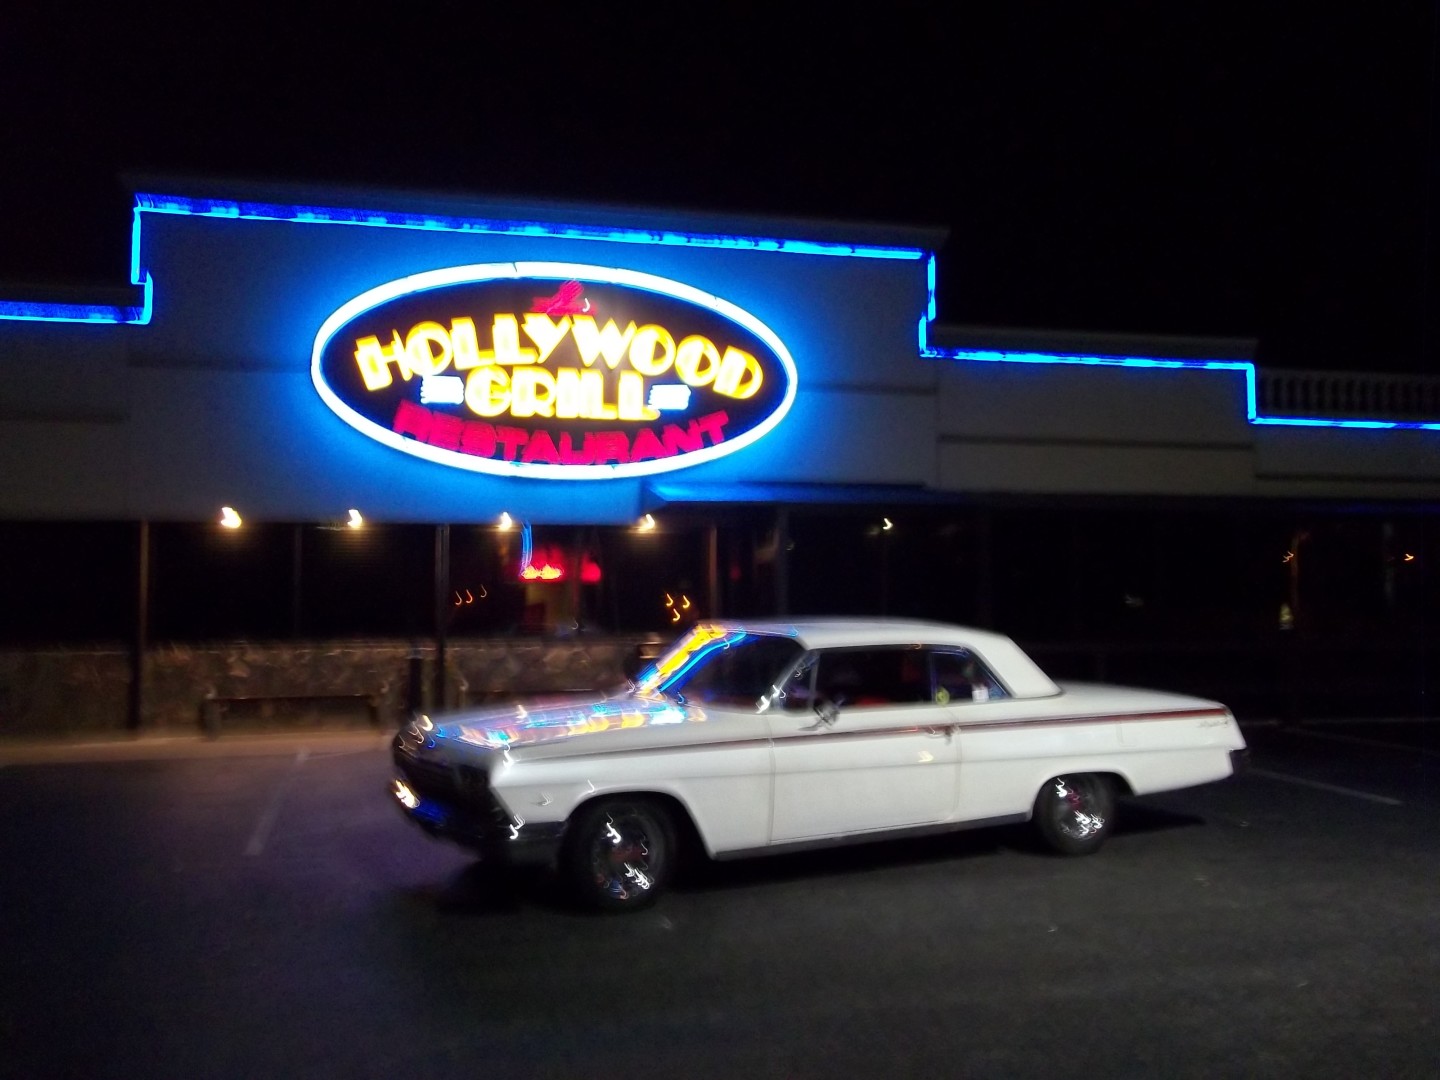 Chevy Impala Retirement project